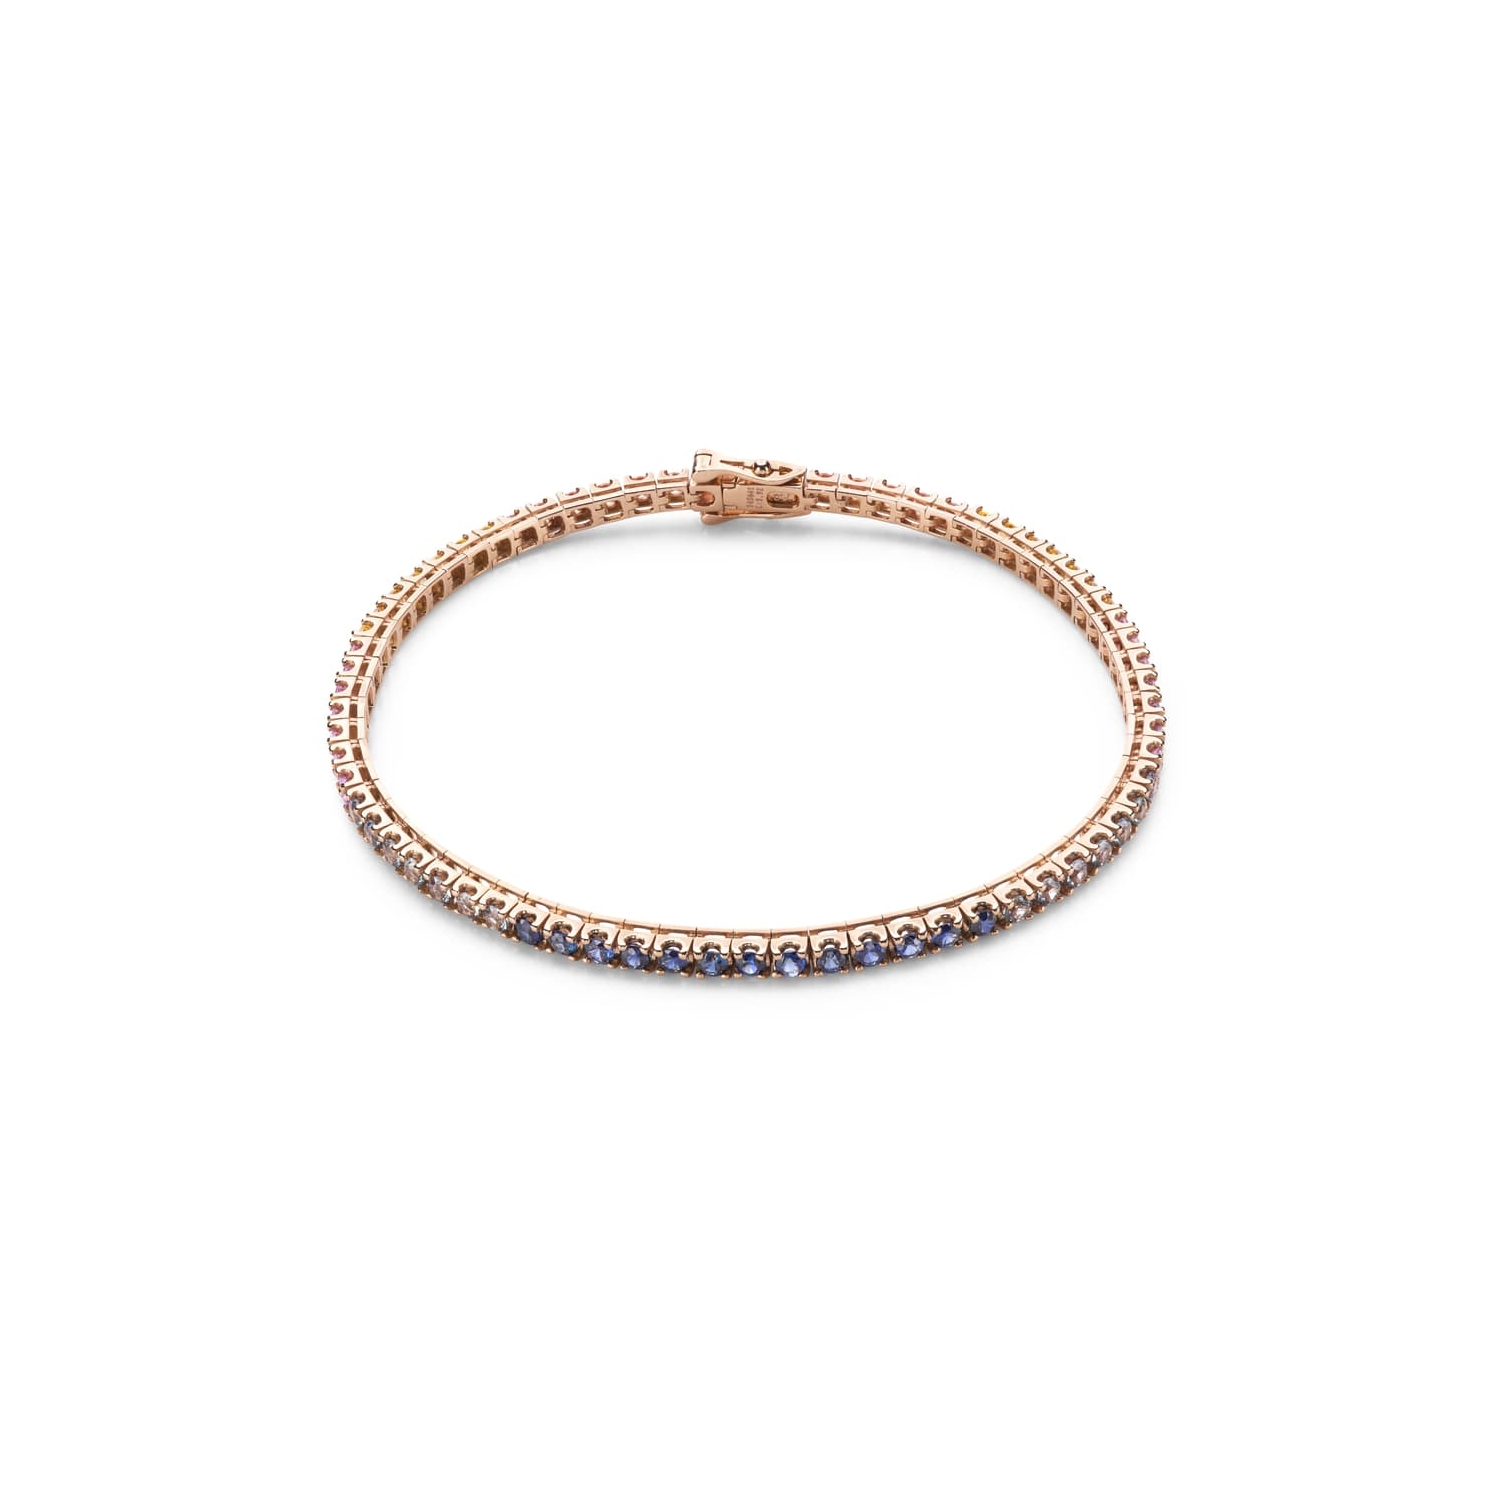 Gold bracelet with gemstones "Colors 126"